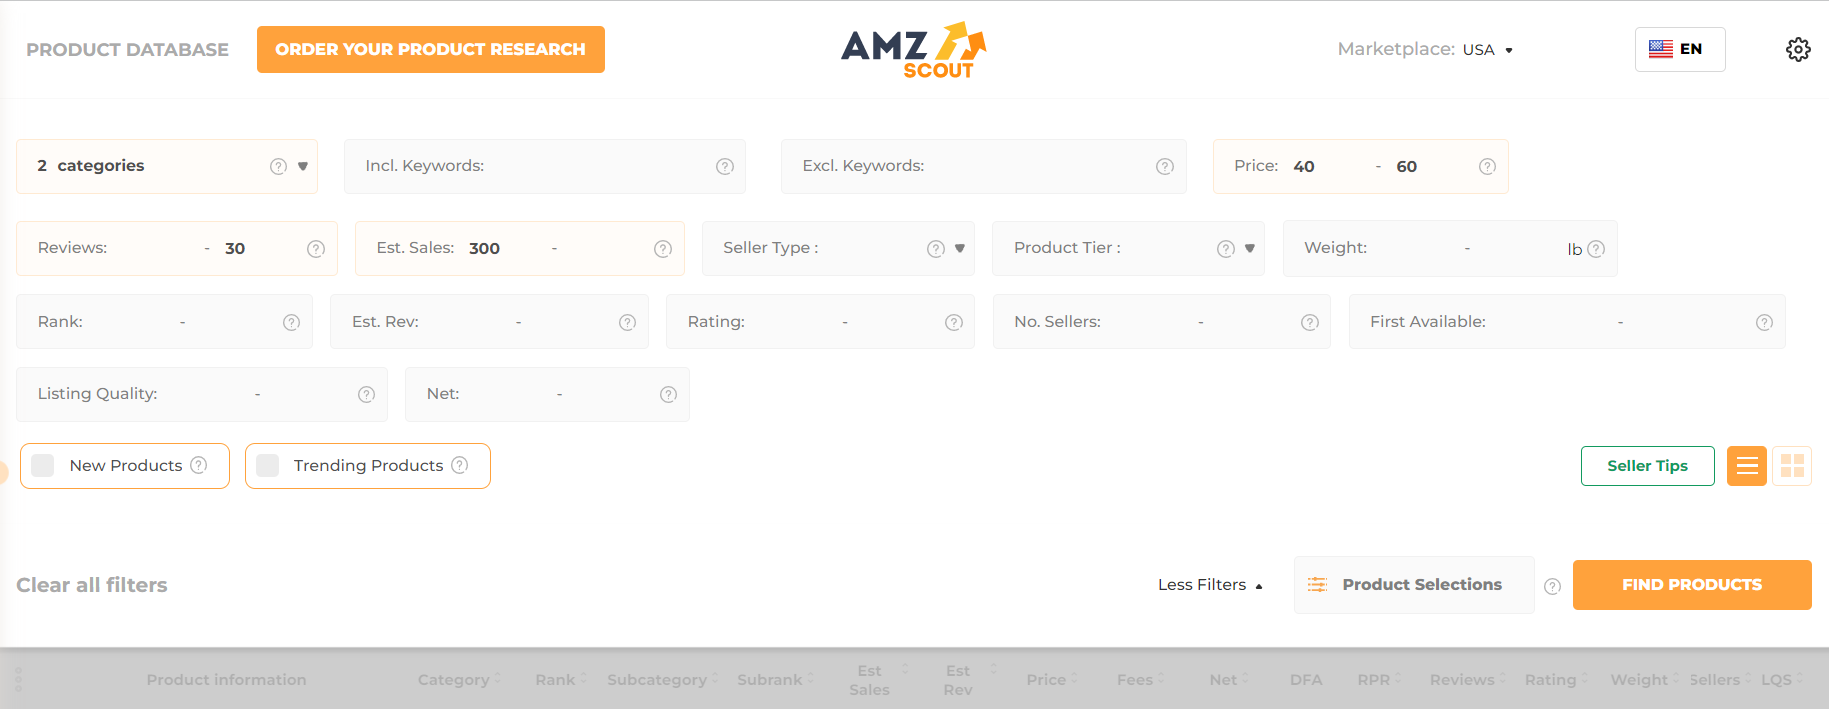 amzscout-amazon-database